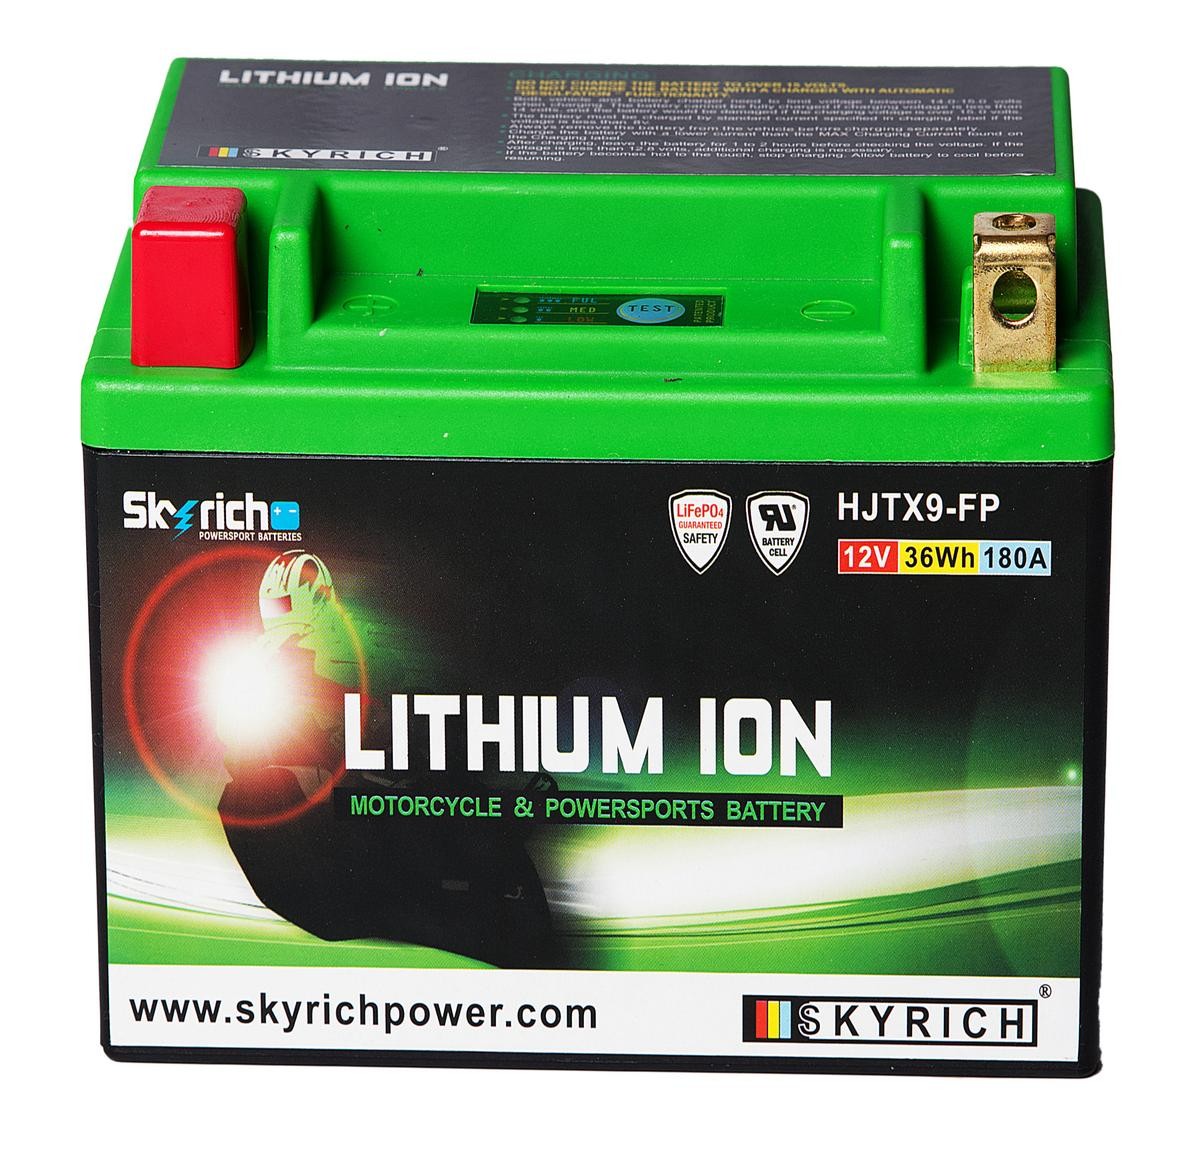 Original HJTX9-FP SKYRICH Battery experience and price